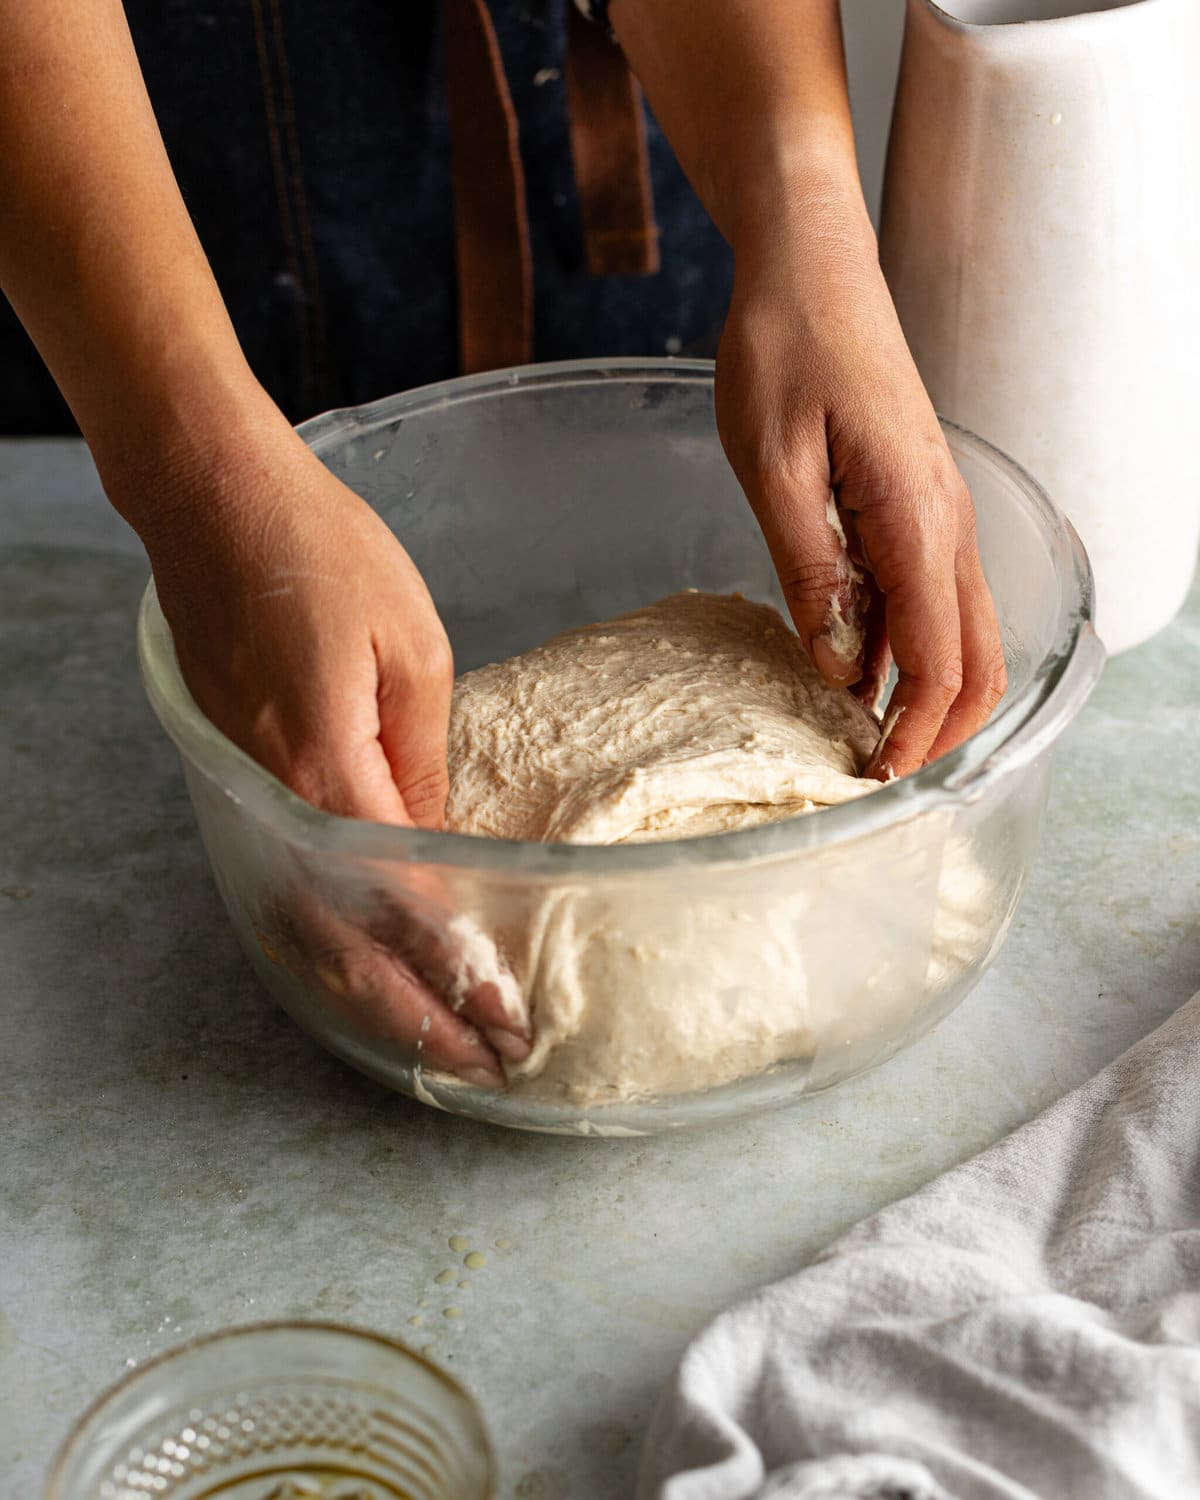 Hands folding a piece of dough inside a glass mixing bowl.